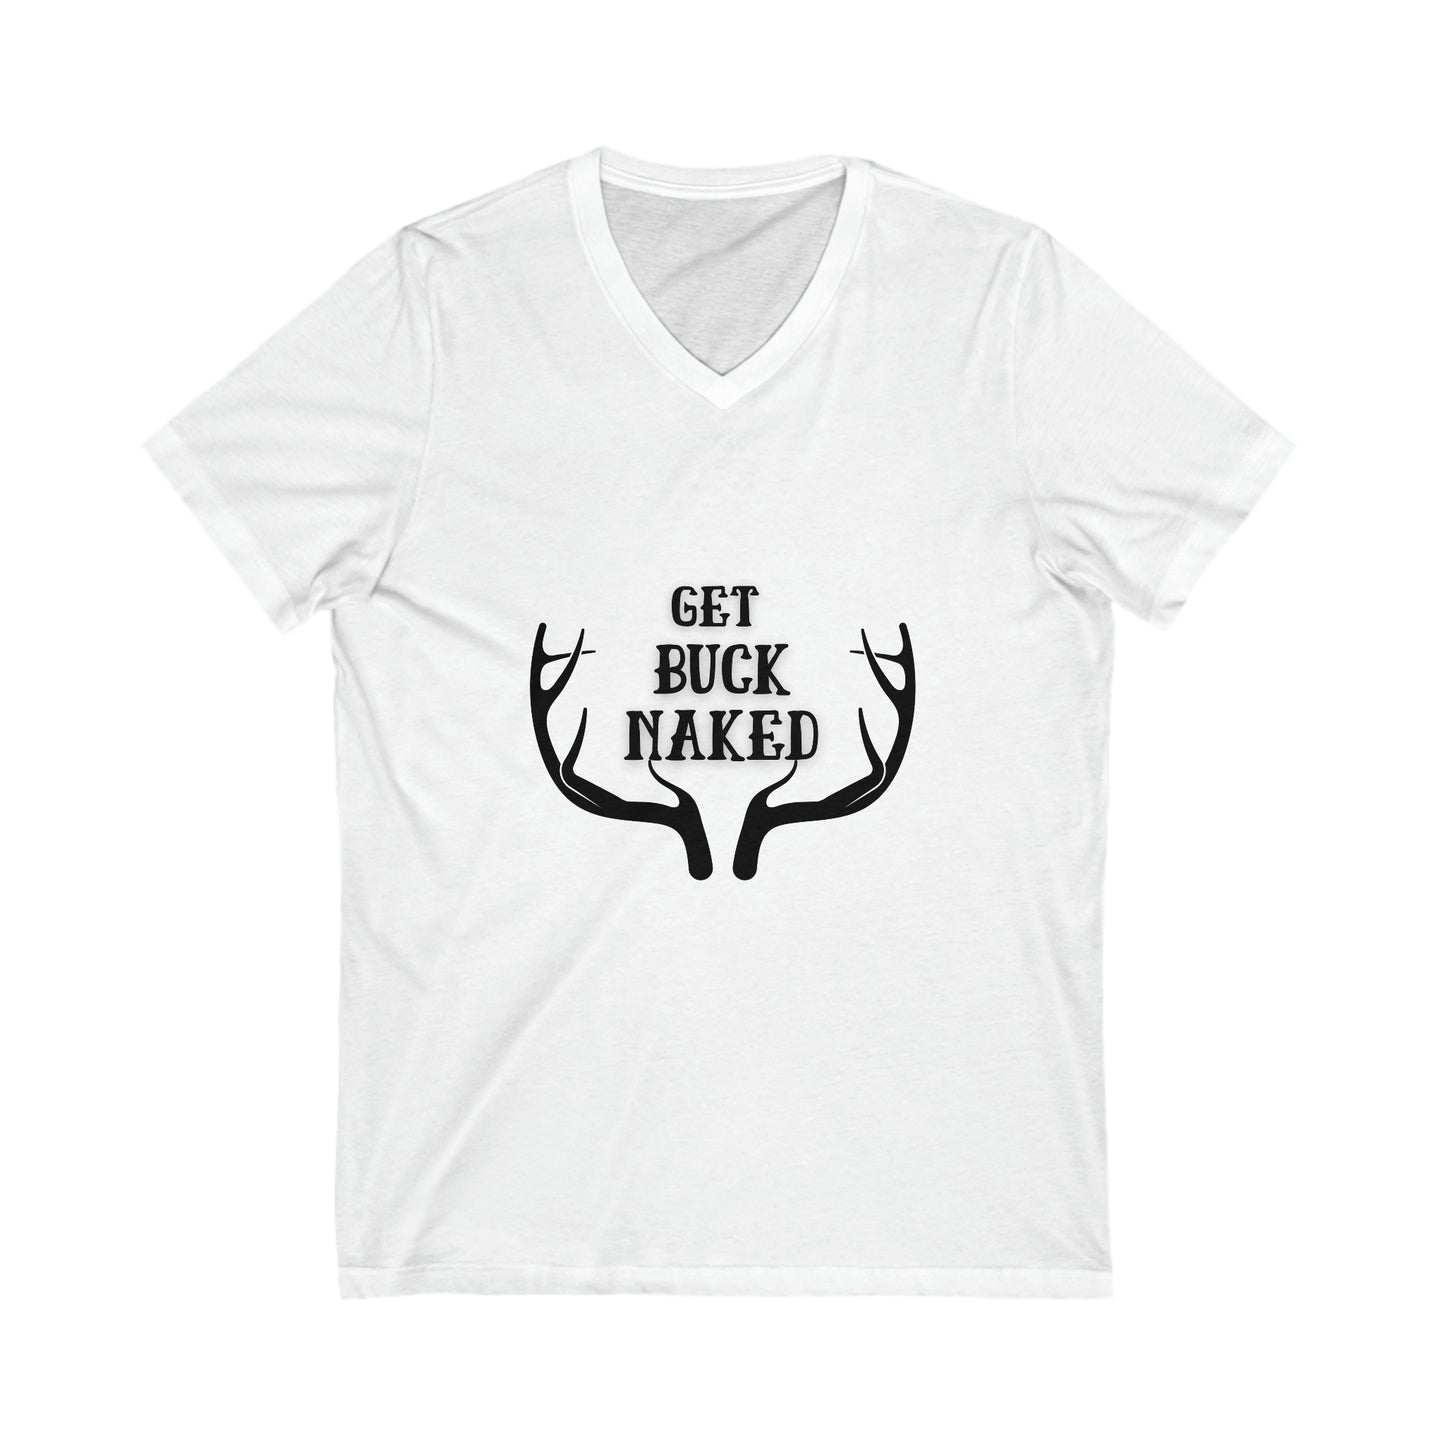 Get buck naked - Unisex Jersey Short Sleeve V-Neck Tee